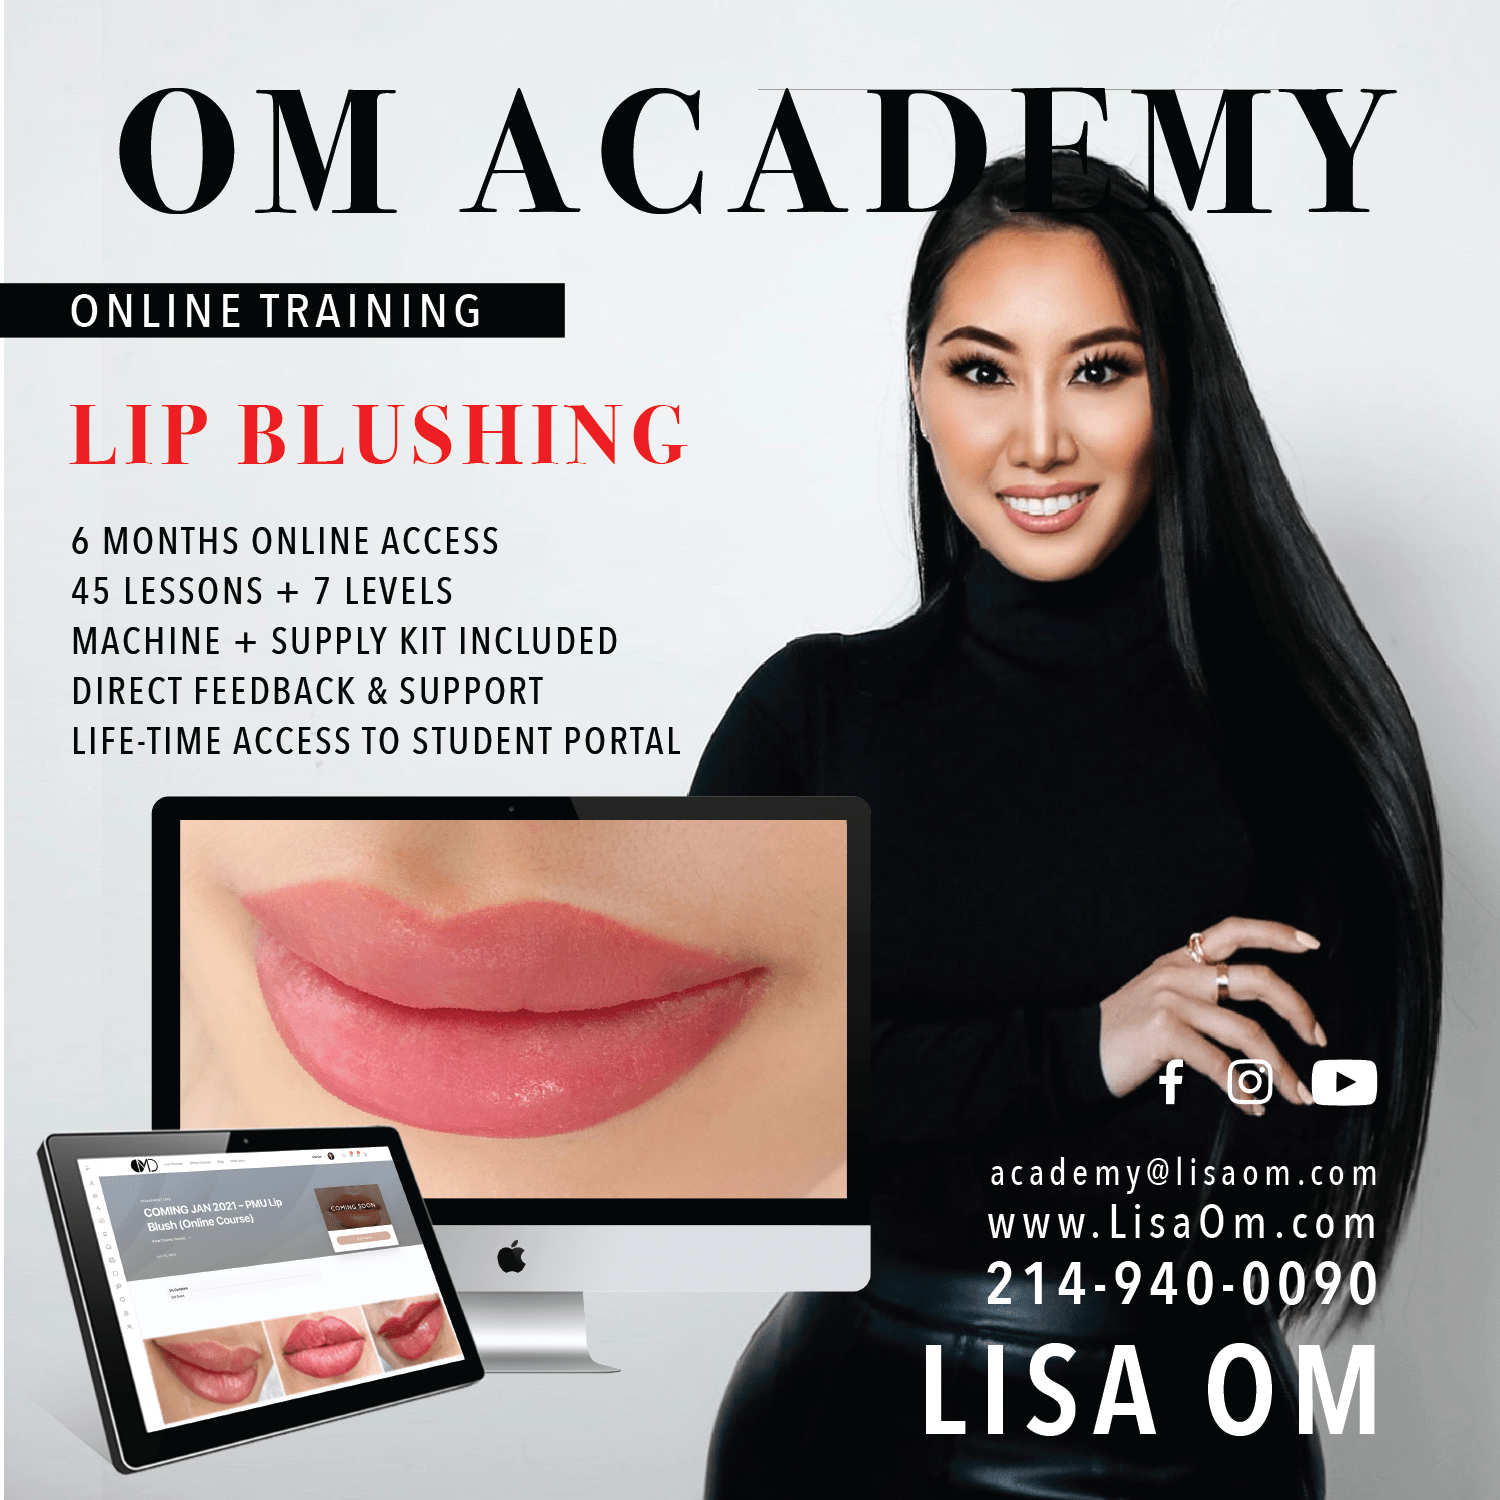 Courses Online | Lisa Om Academy